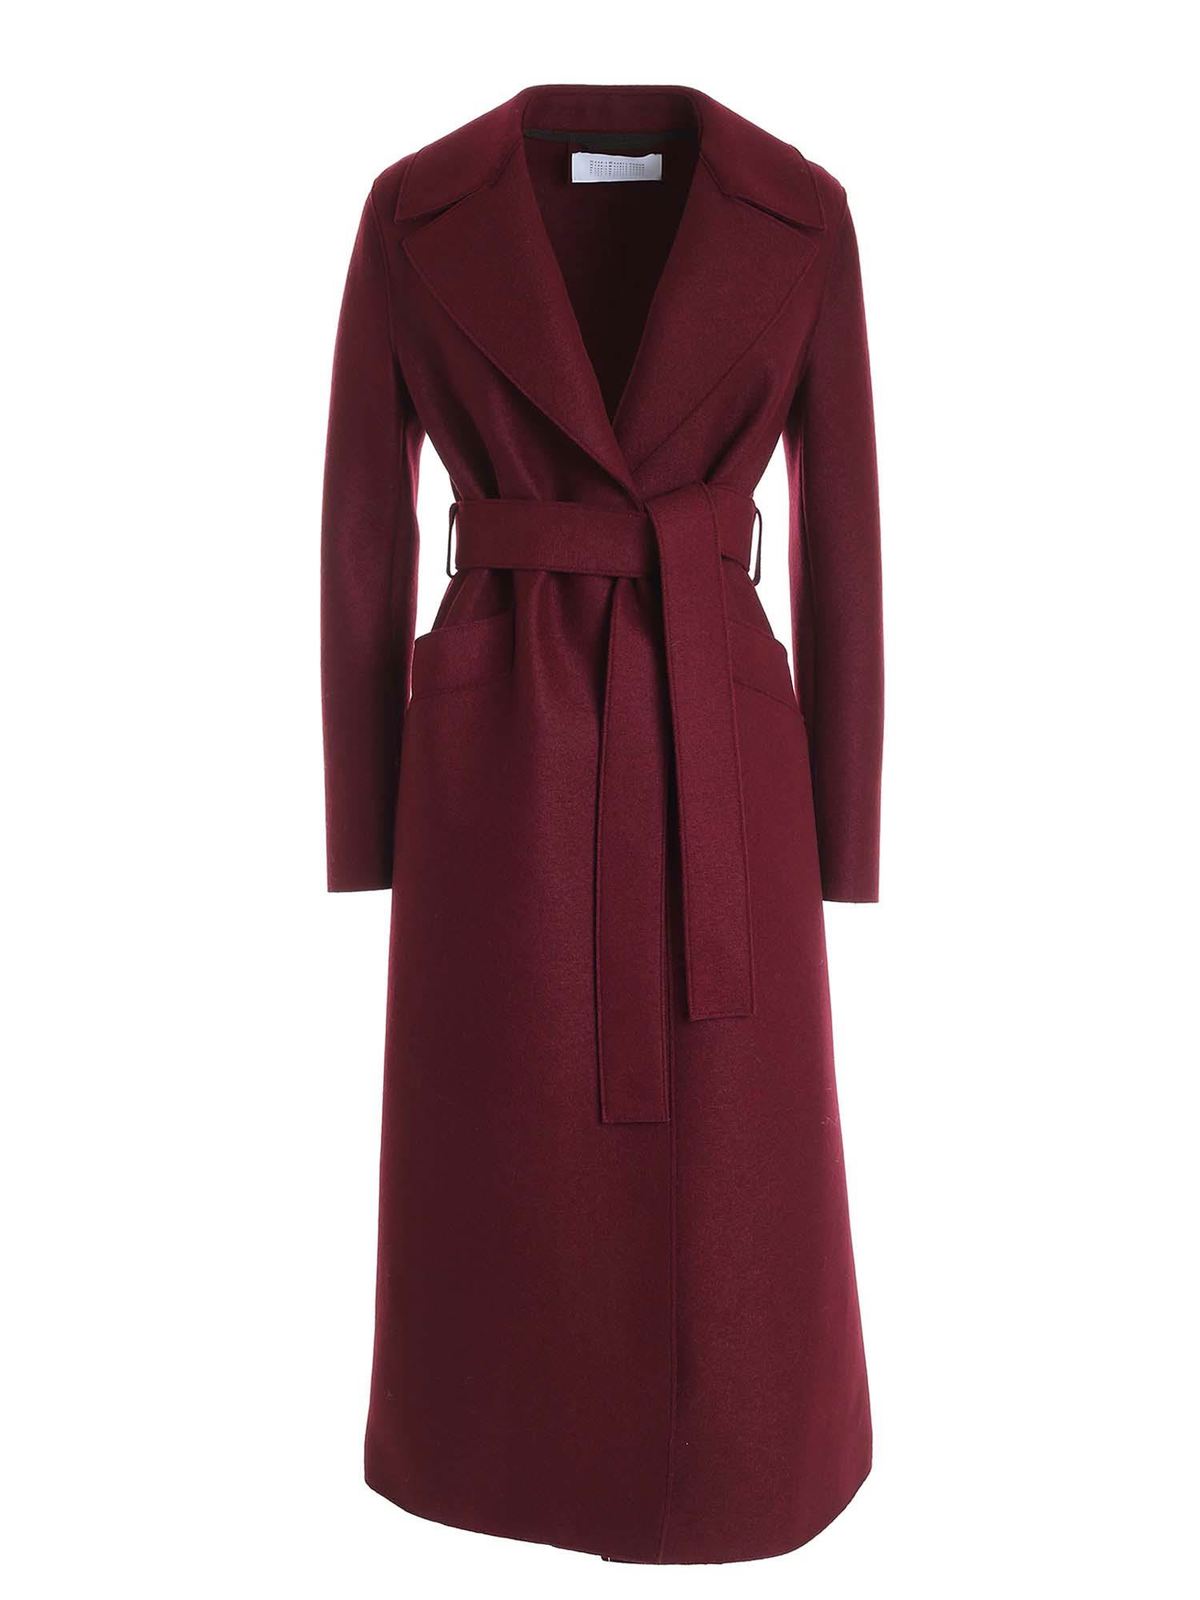 Long coats Harris Wharf London - Virgin wool coat in burgundy color ...